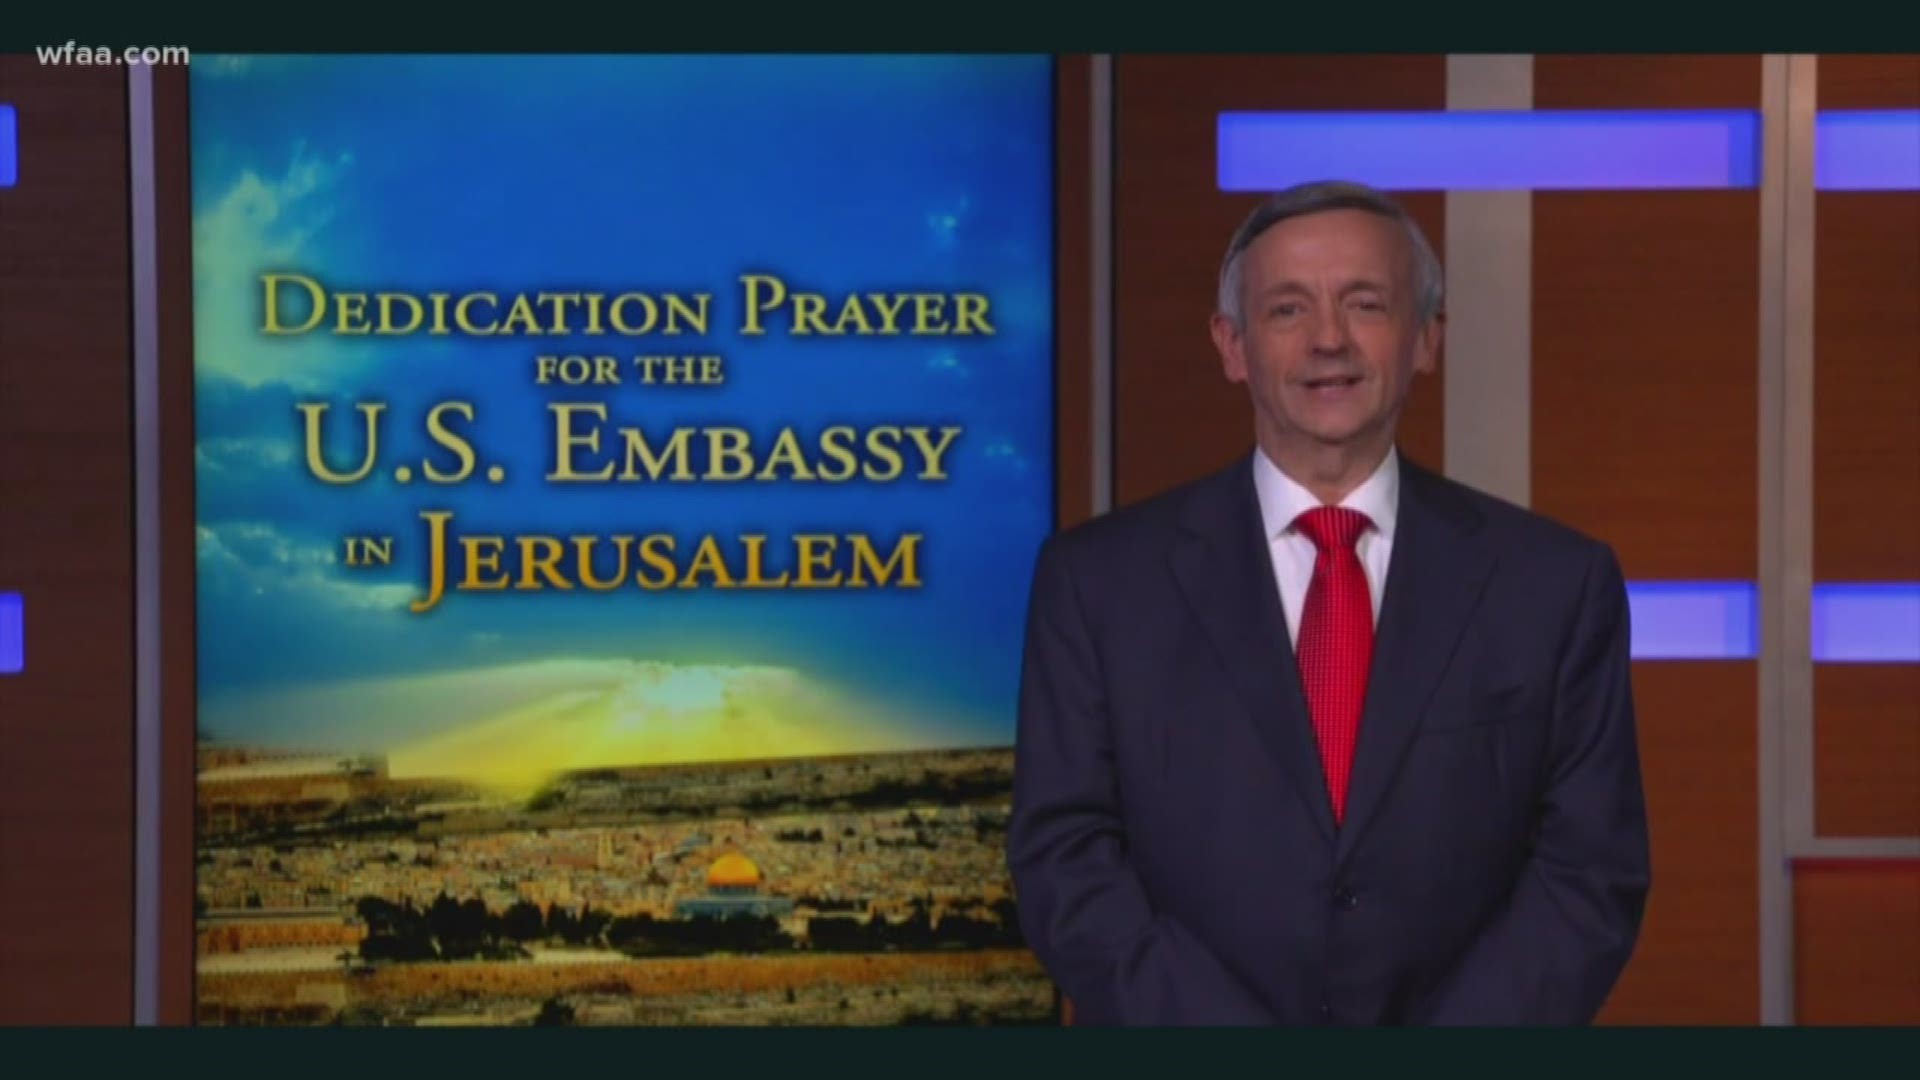 Dallas pastor Robert Jeffress will give dedication prayer at U.S. embassy in Jerusalem